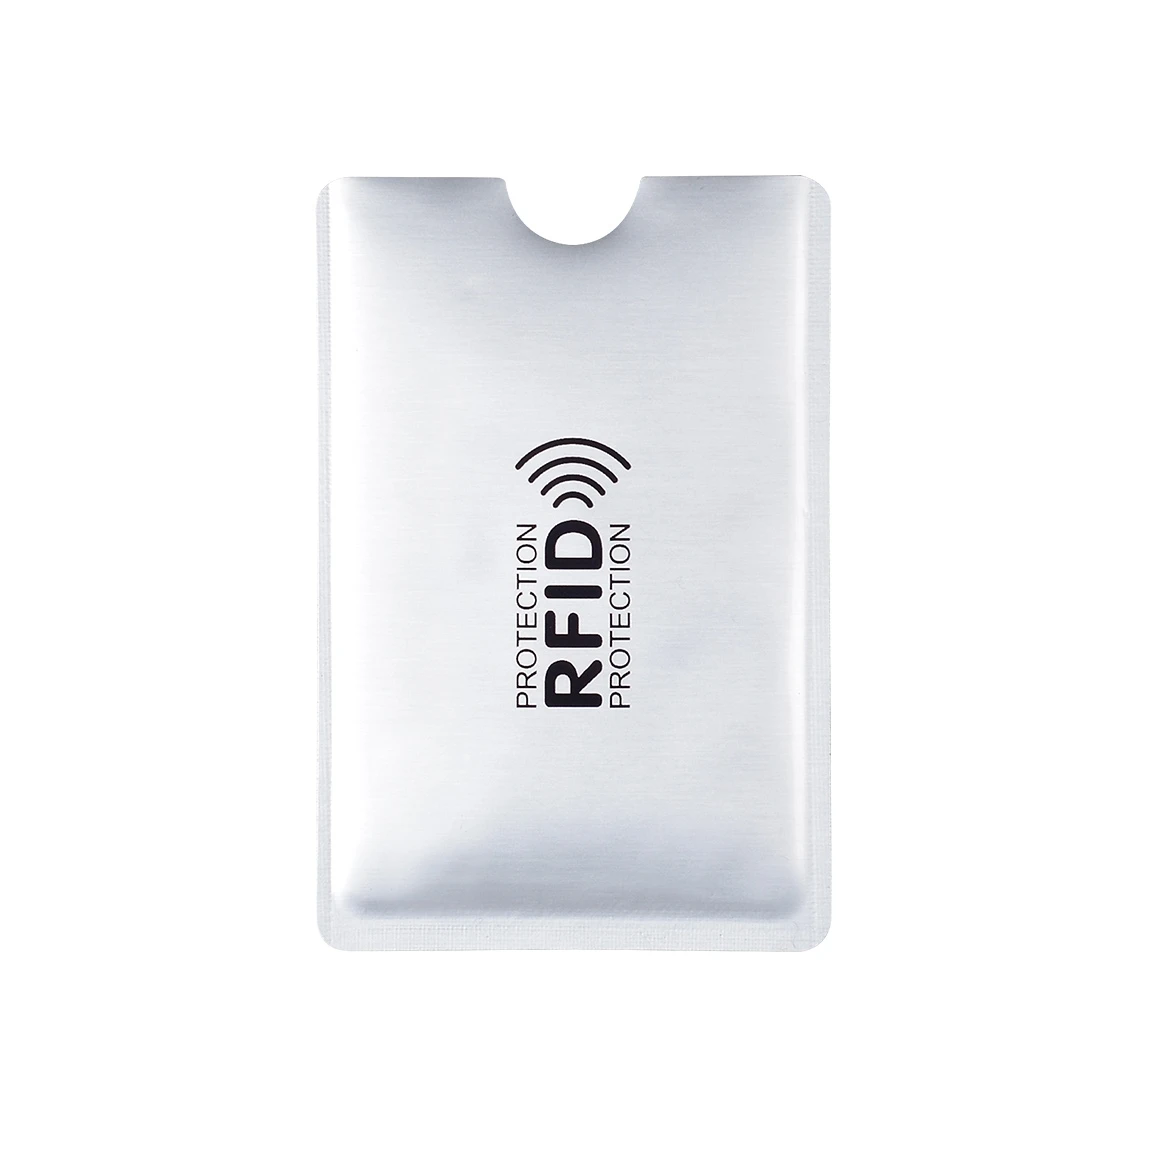 5-20 stücke Aluminium Anti Rfid Karte Halter NFC Blockieren Reader Sperren Id Bankkarte Halter Fall Schutz Metall kreditkarte Fall